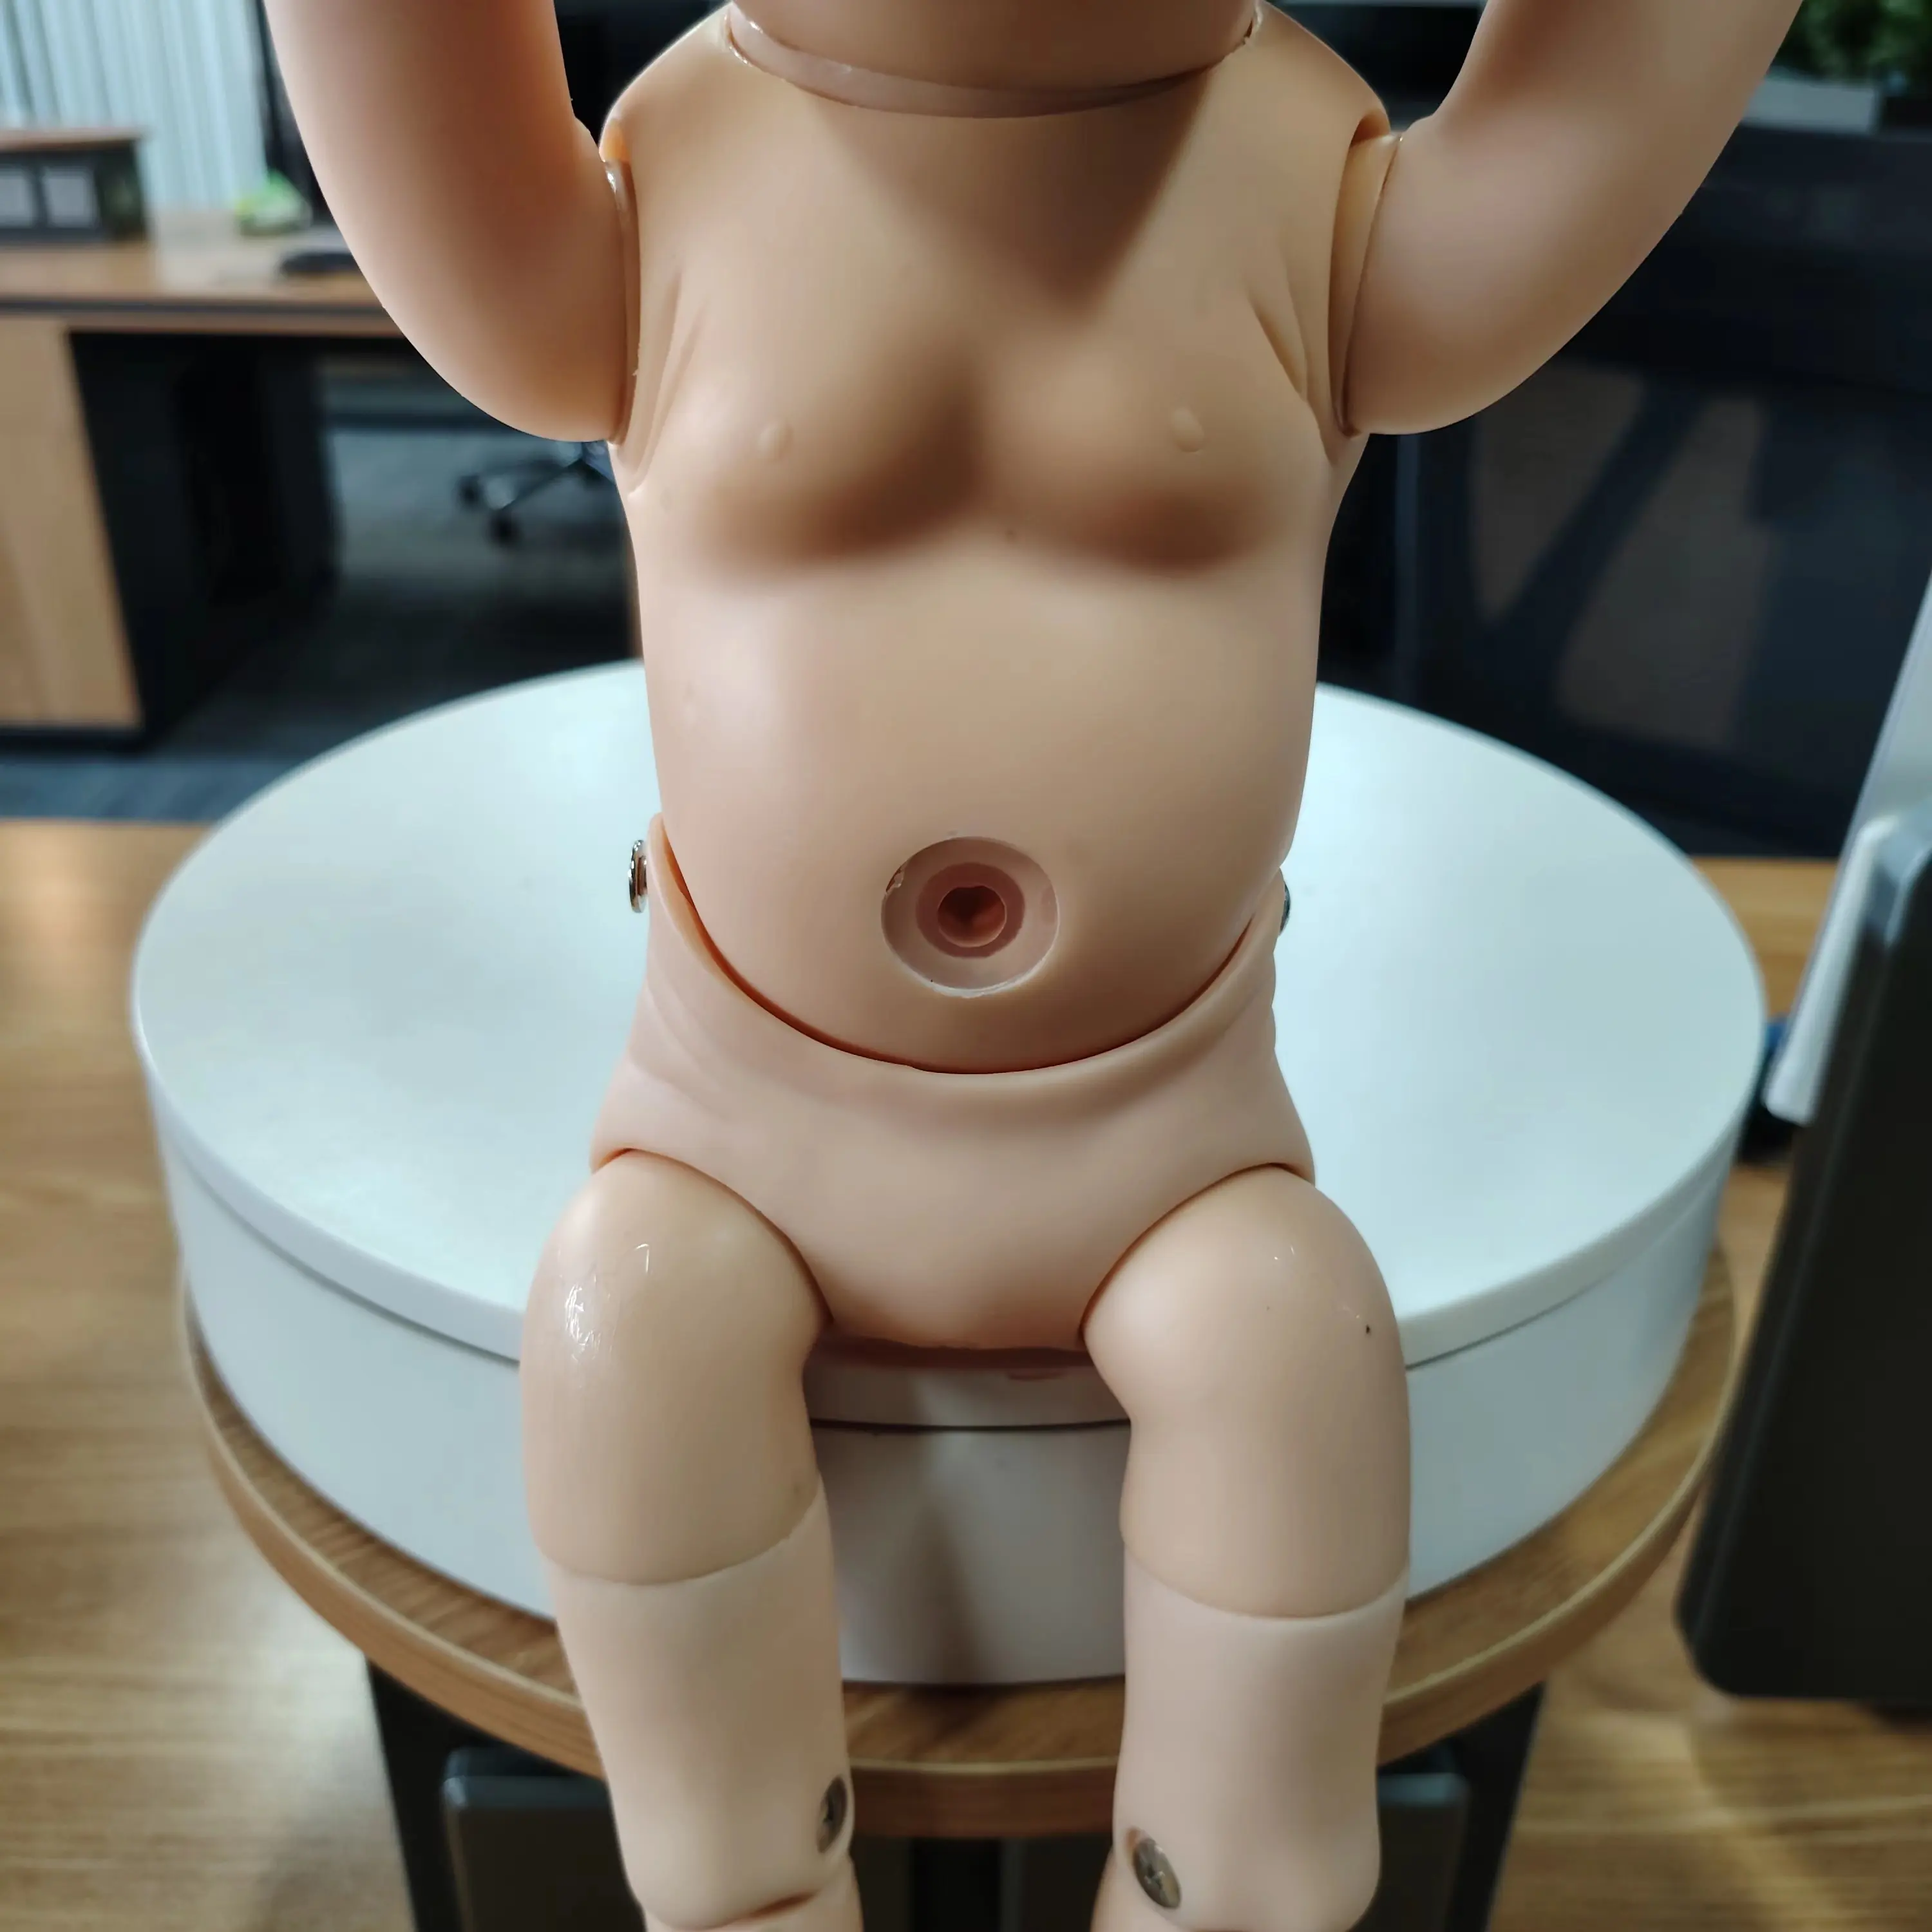 DARHMMY גמיש דגם תינוק בן יומו לתינוק מלמד מדעי רפואה בובת ראווה עם גפיים ניתנות לכיפוף